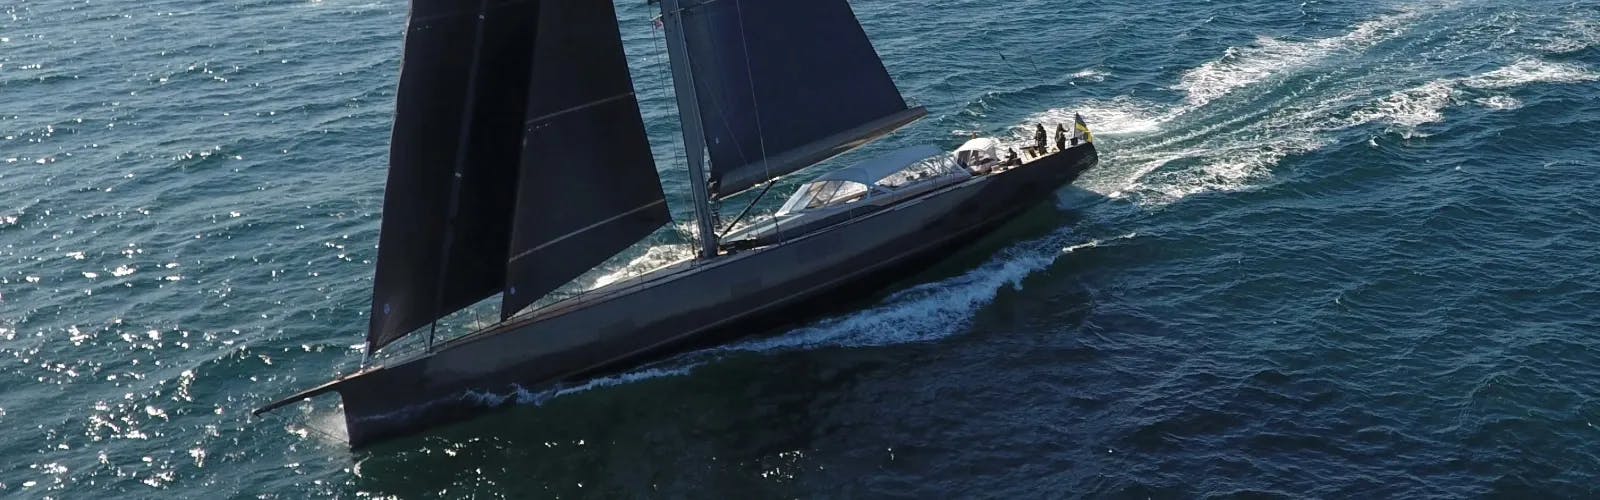 Baltic yacht zemi sailing